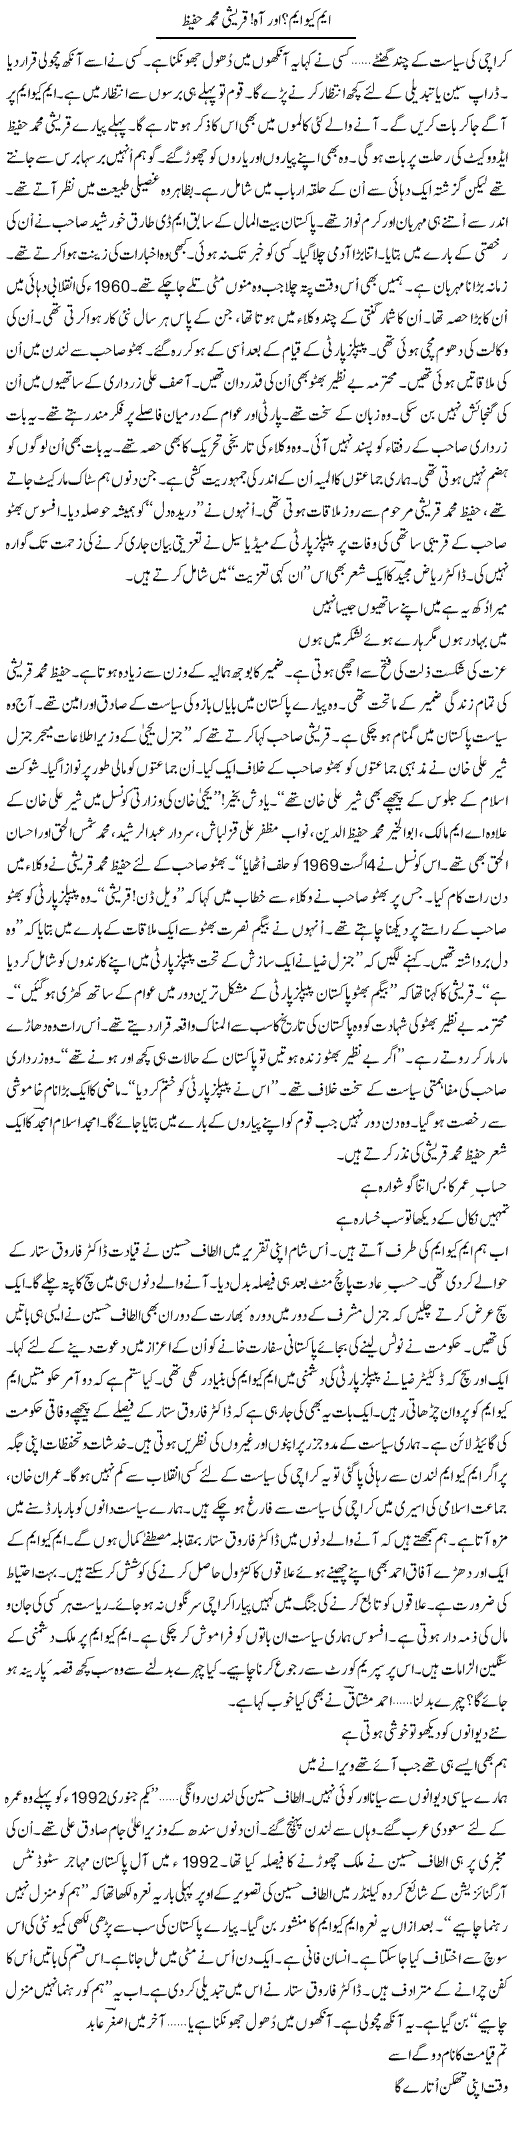 MQM? aor aah! qureshi Muhammad Hafeez | Ejaz Hafeez Khan | Daily Urdu Columns